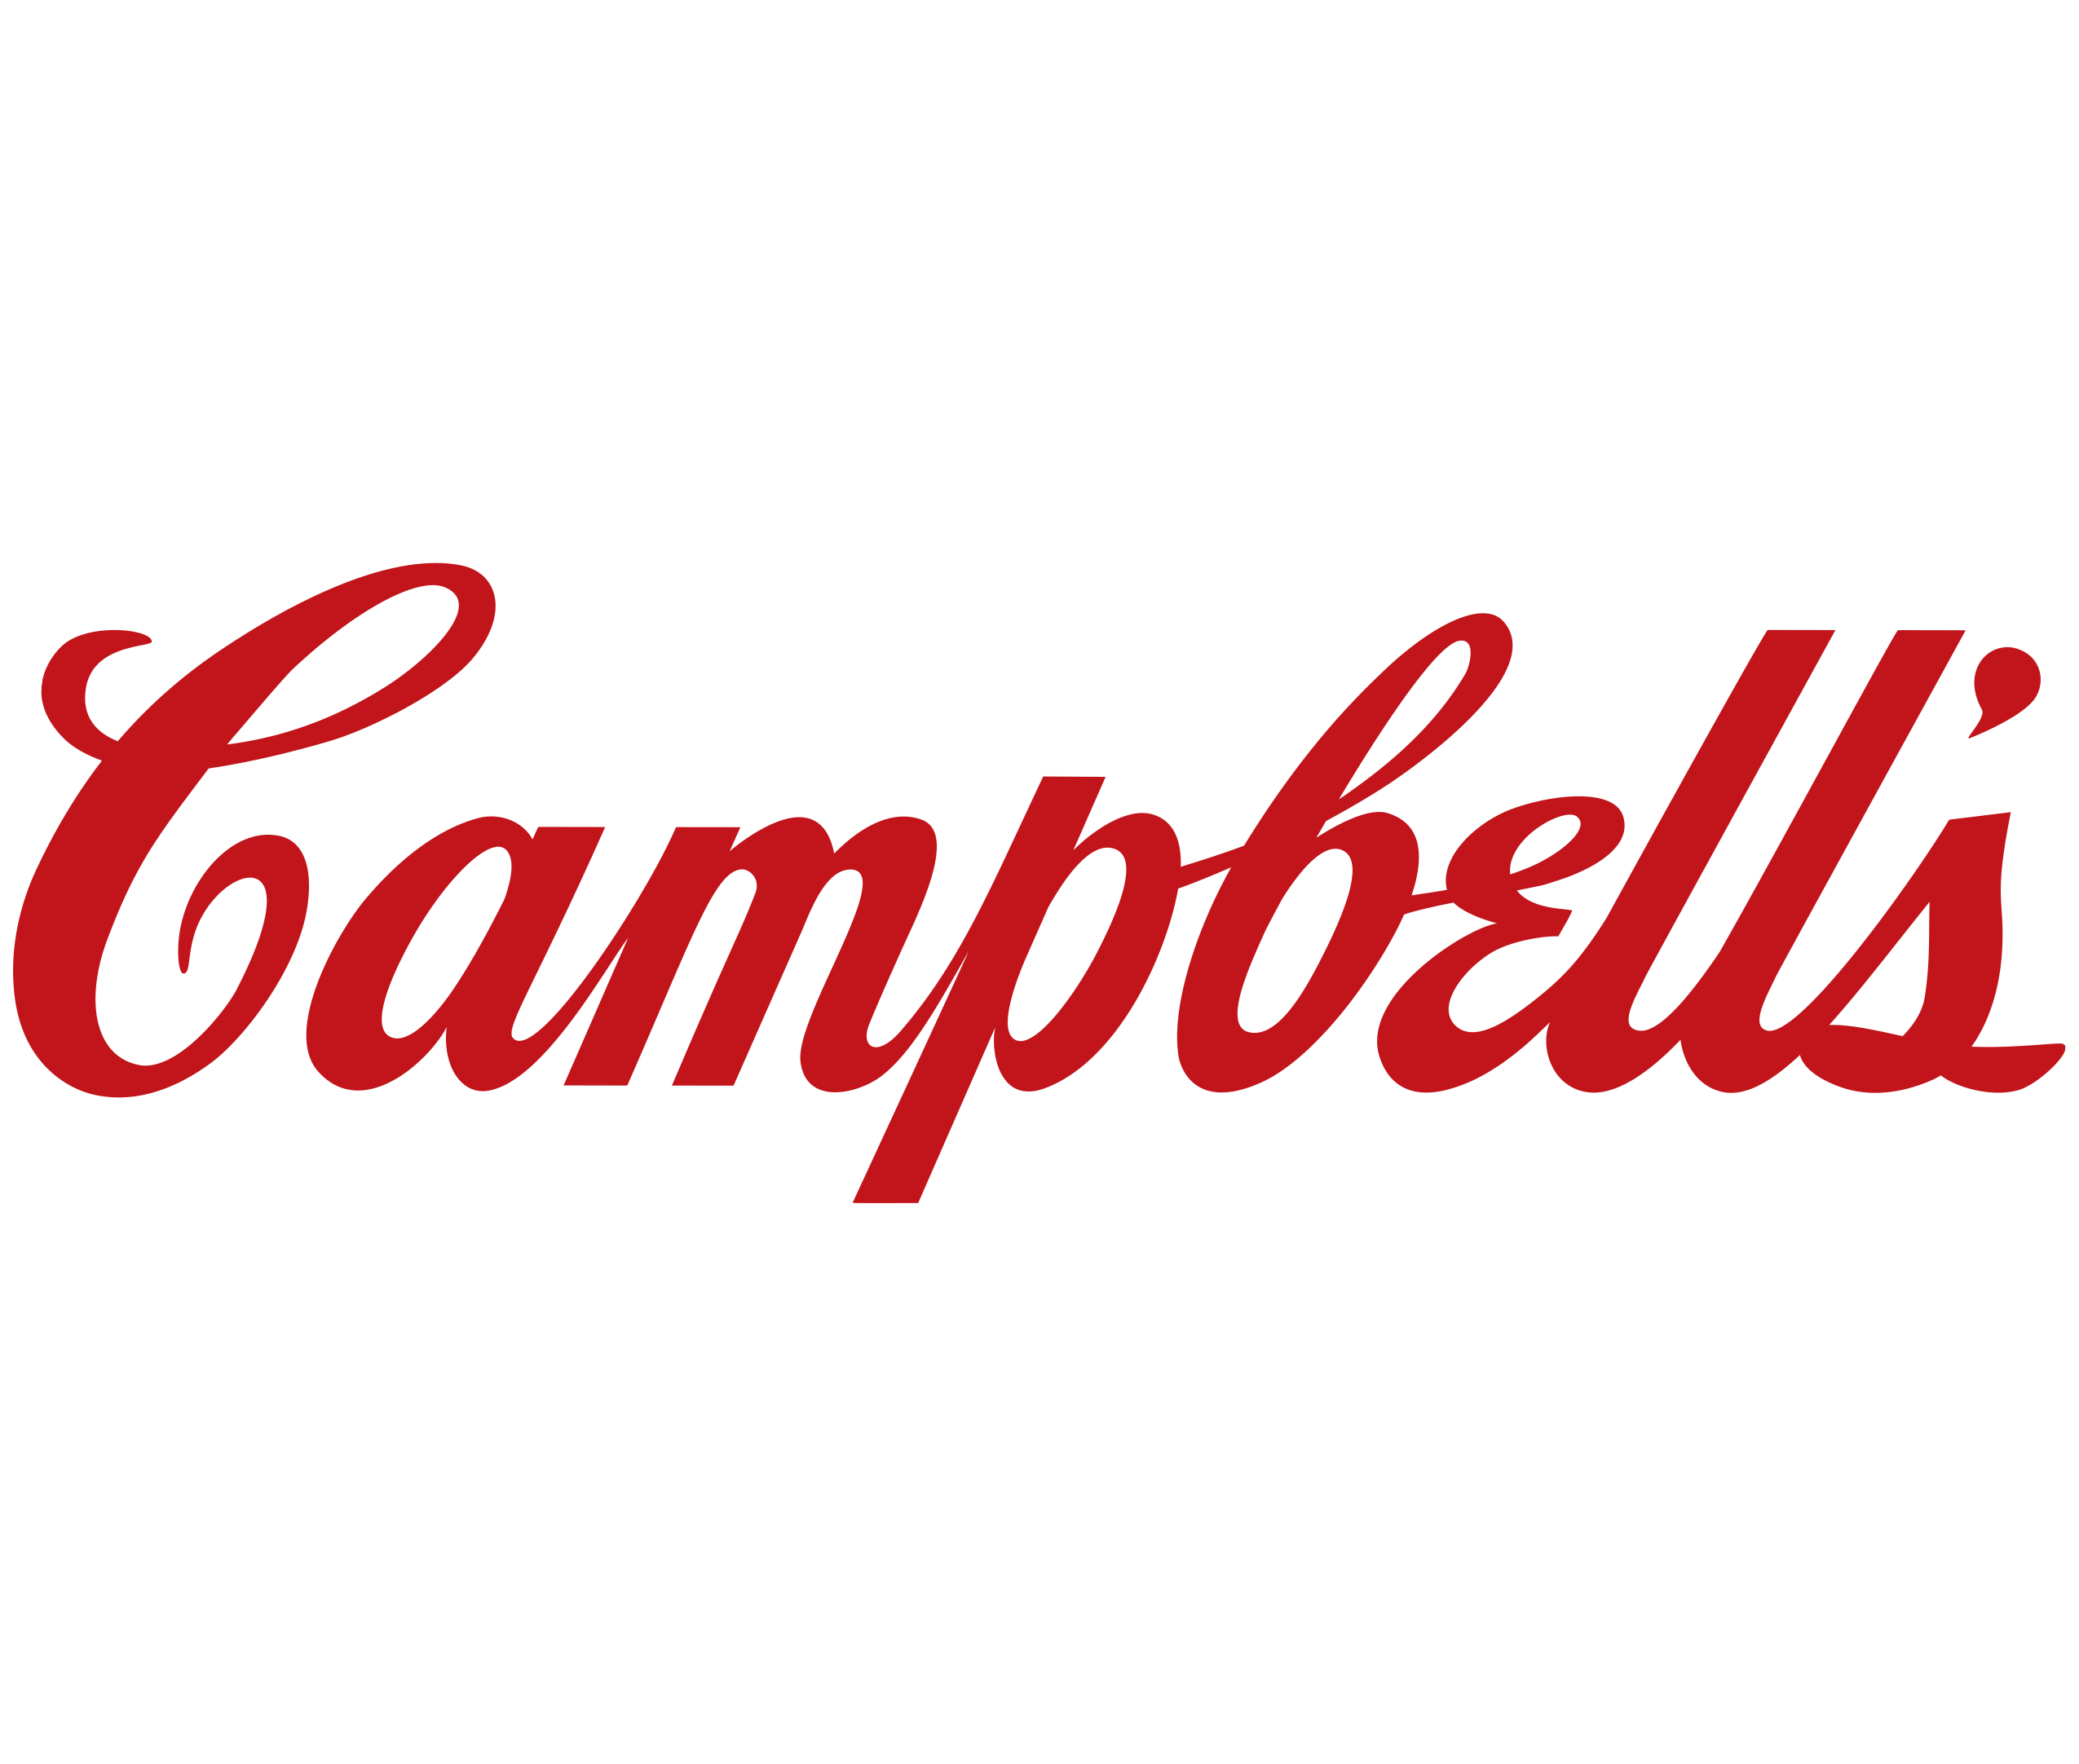 Campbell’s Logo PNG Transparent